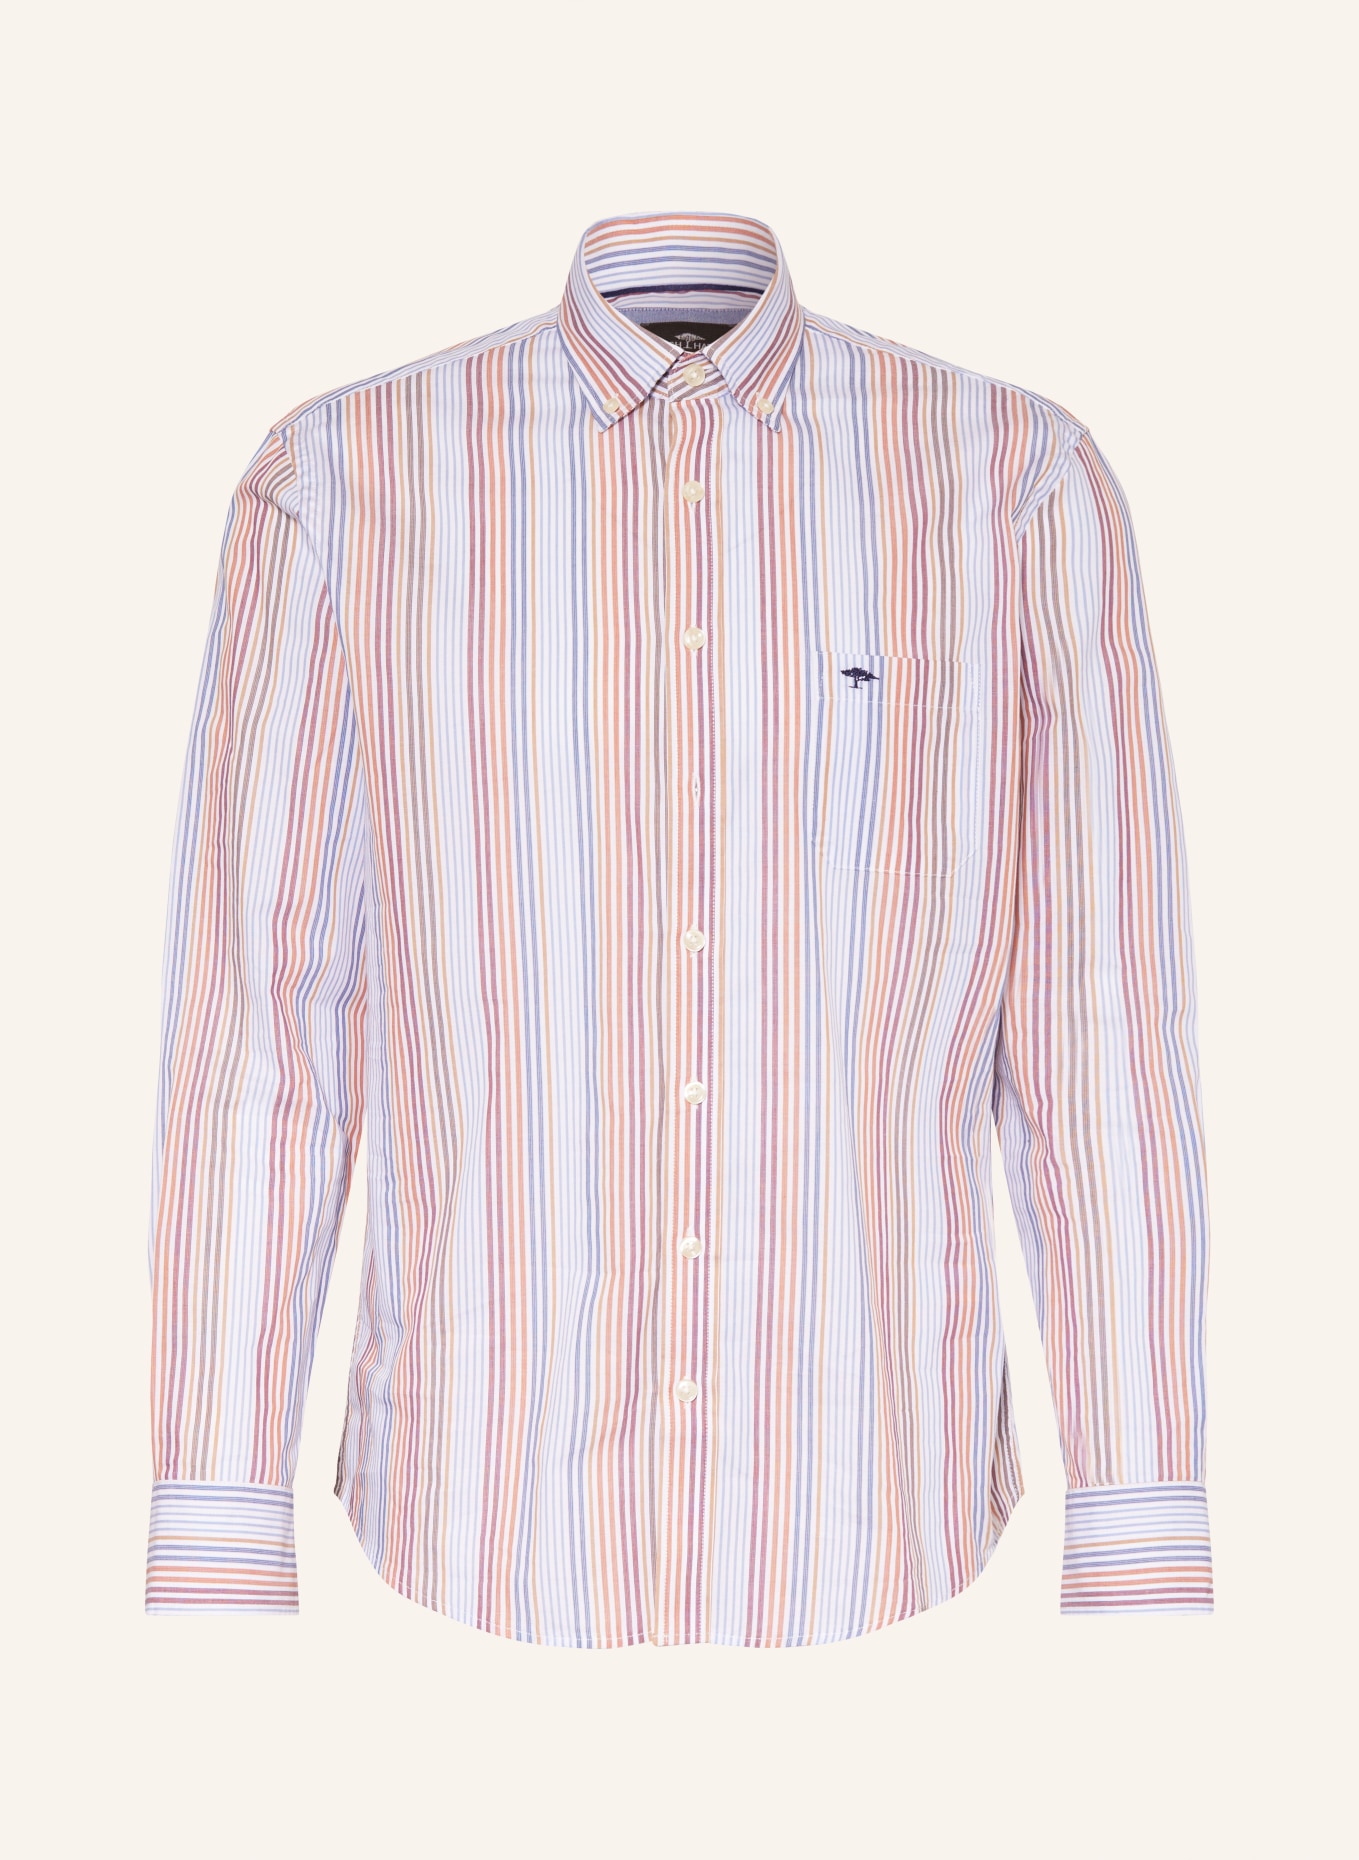 FYNCH-HATTON Hemd Regular Fit, Farbe: WEISS/ HELLBLAU/ LACHS (Bild 1)